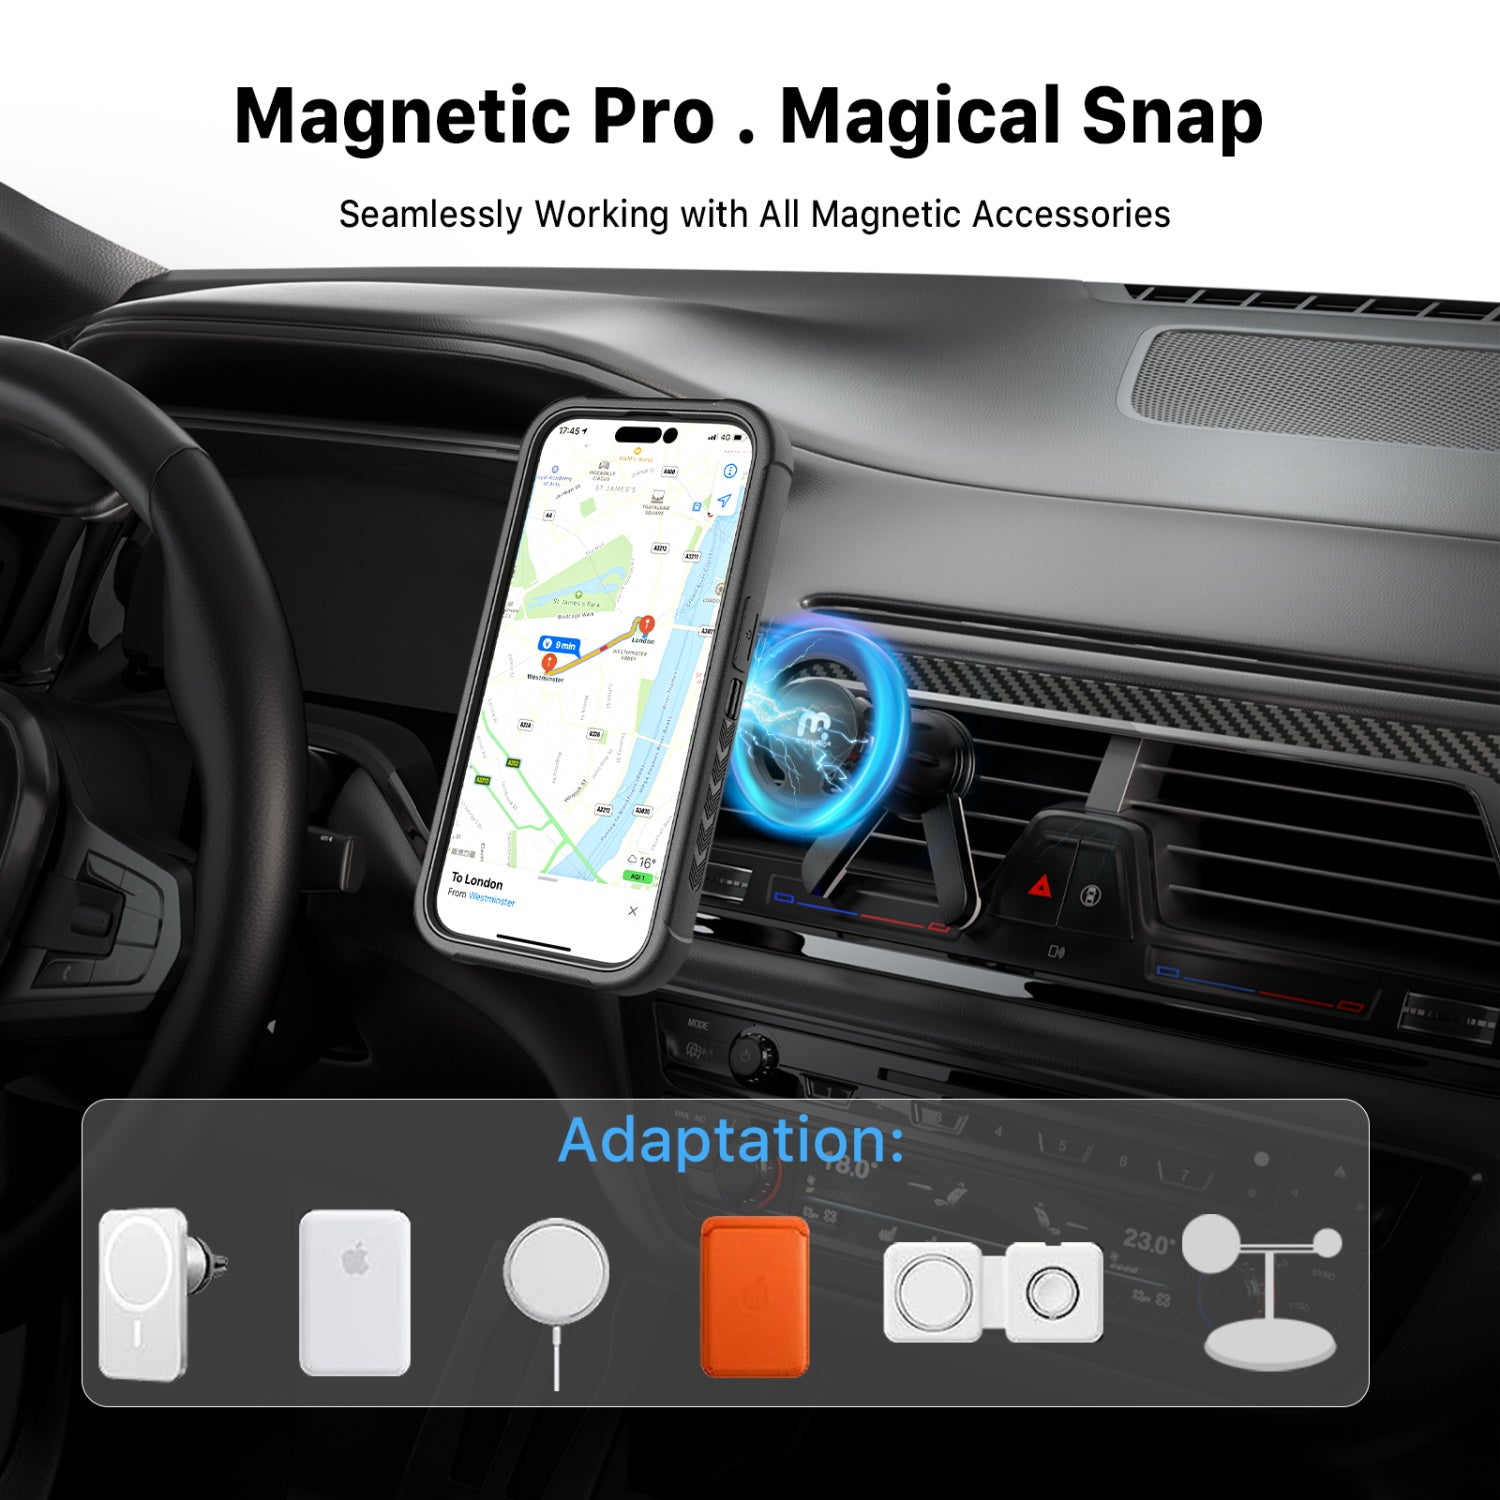 Estuche para iPhone 15 Pro Max - MyBatPro Maverick Series - Negro MyBat Pro